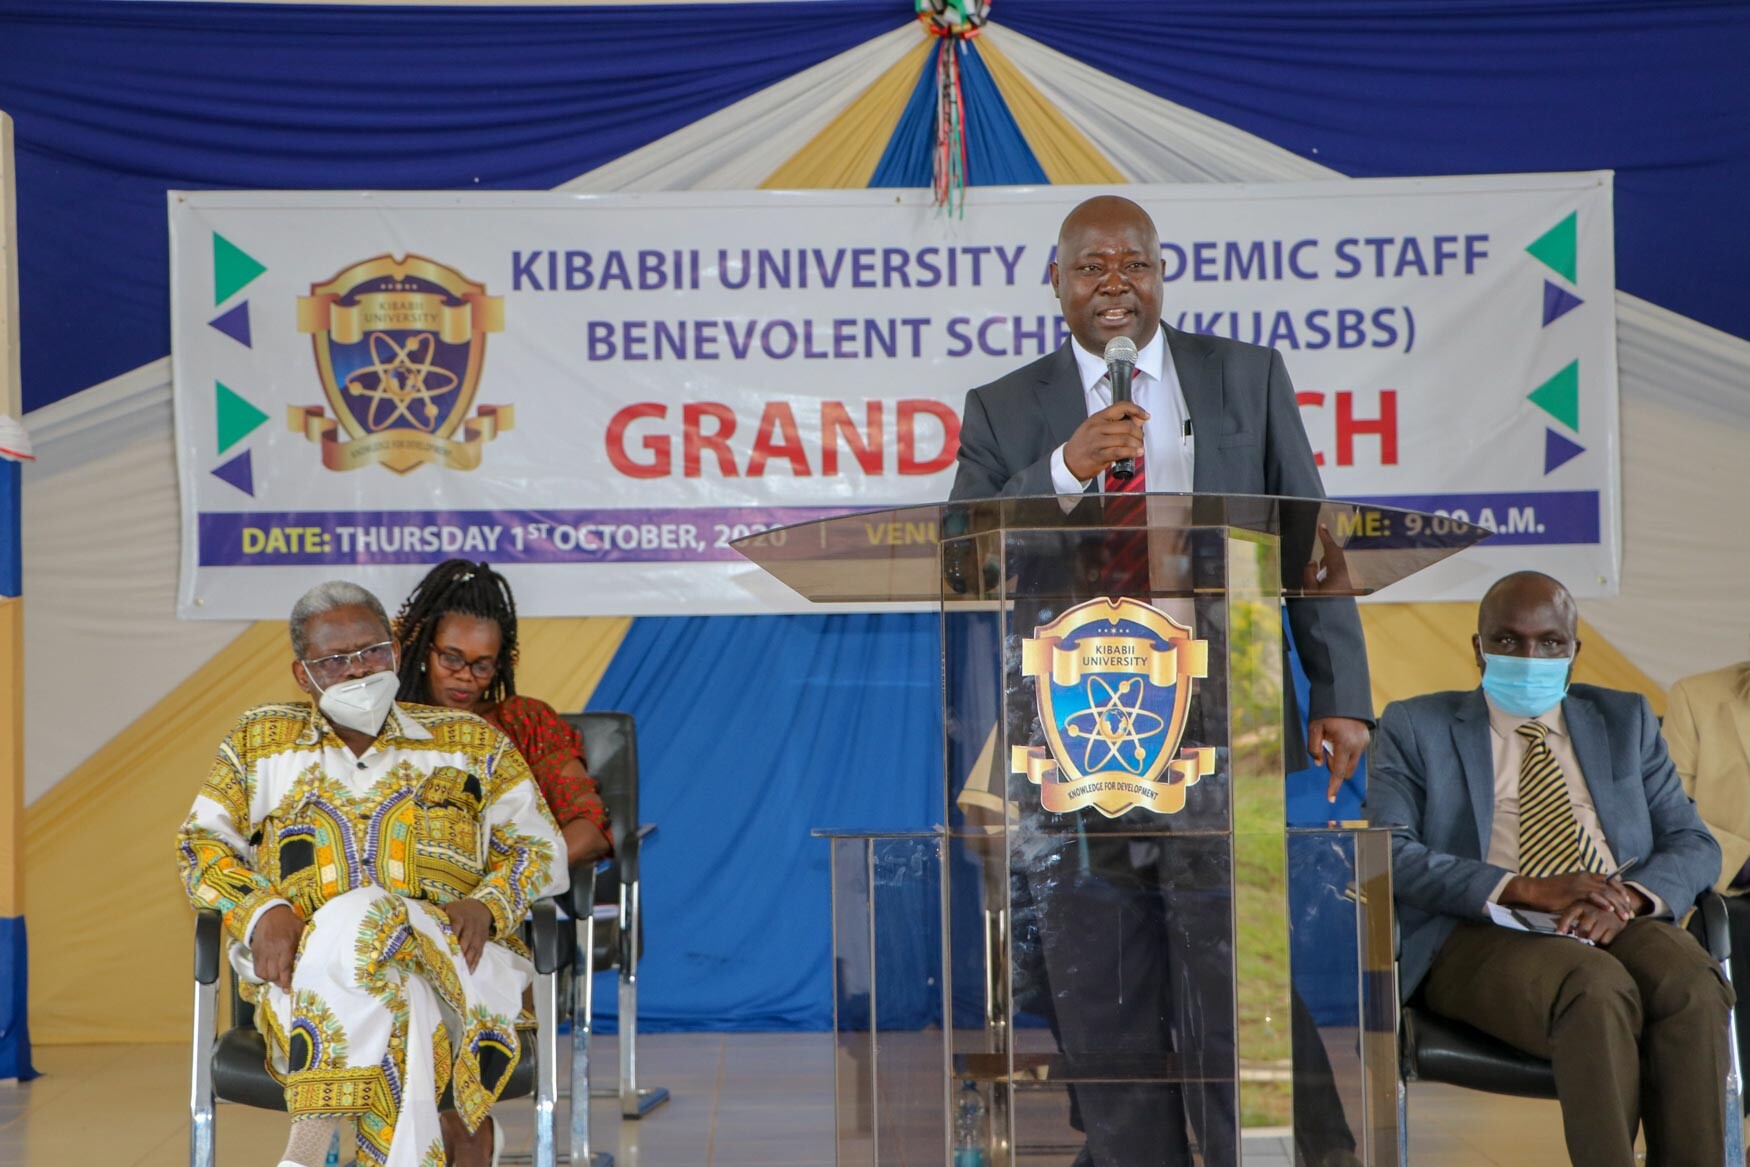 Academic Staff Benevolent Scheme (KUASBS) Grand Launch Album2